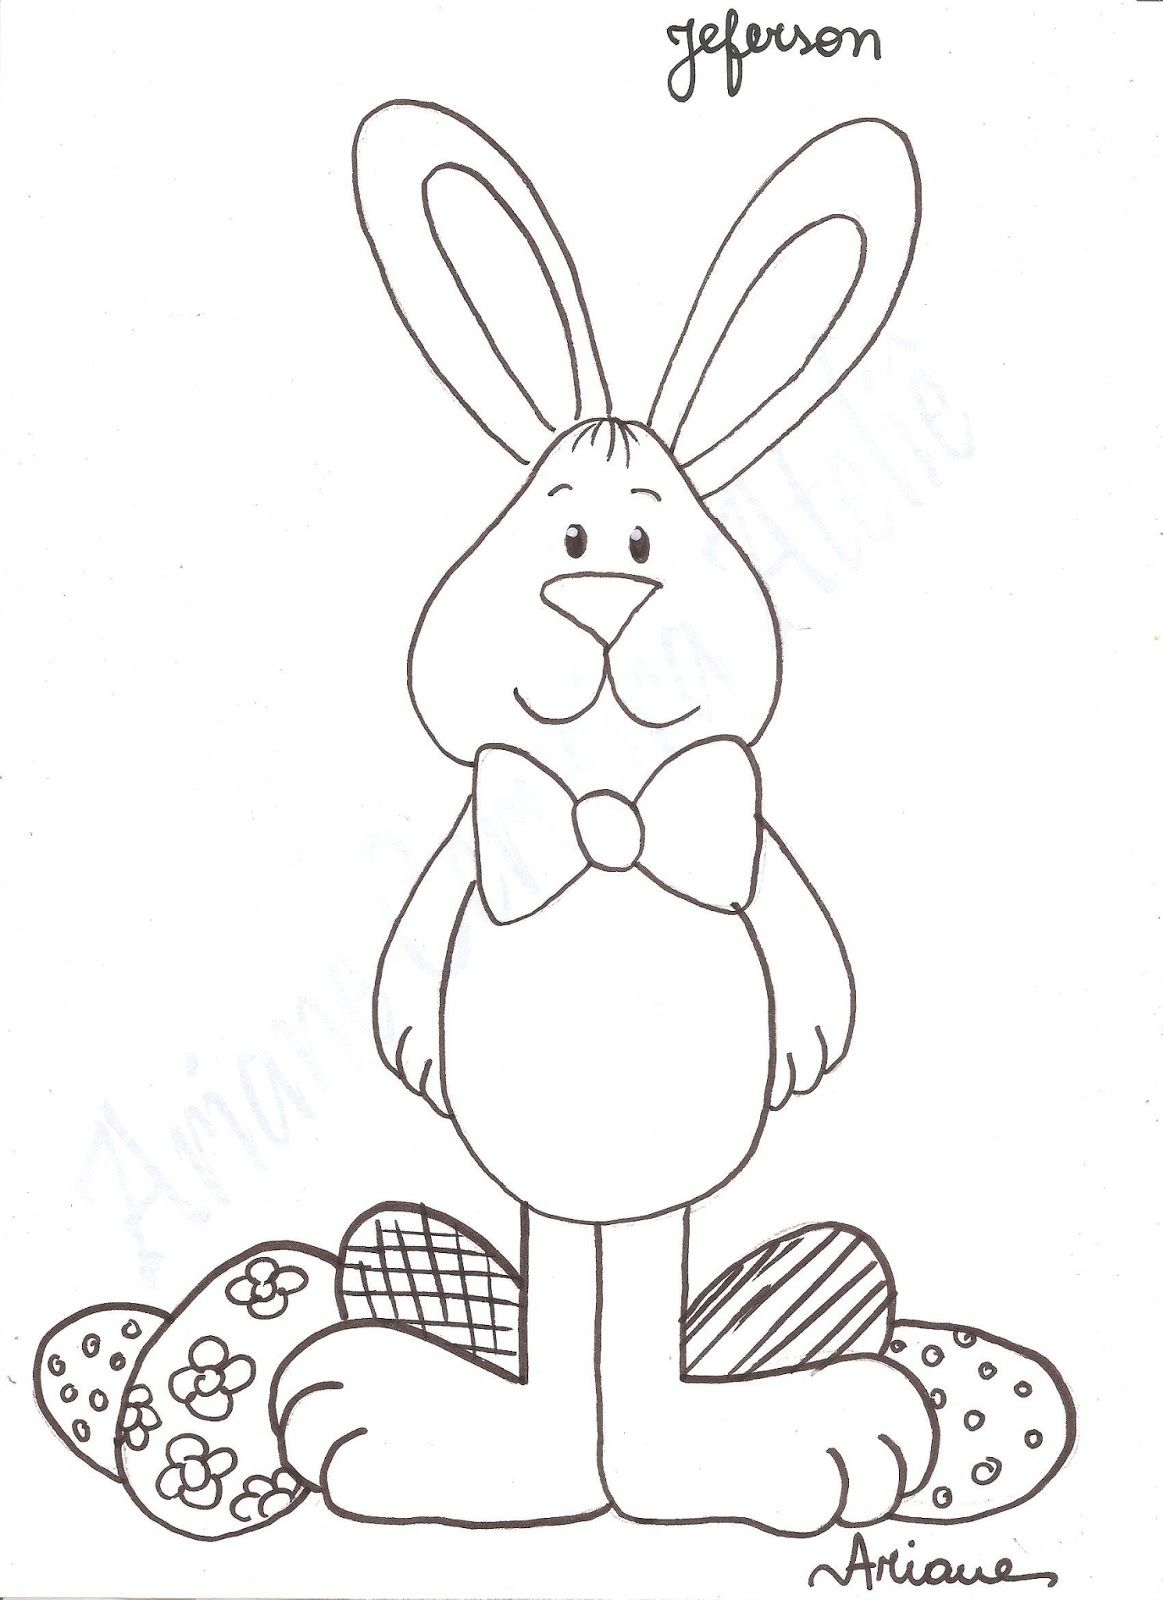 Шаблон пасхального зайца. Трафарет зайца. Трафарет пасхального зайца. Рисование Пасхальный заяц. Пасхальный кролик шаблон.